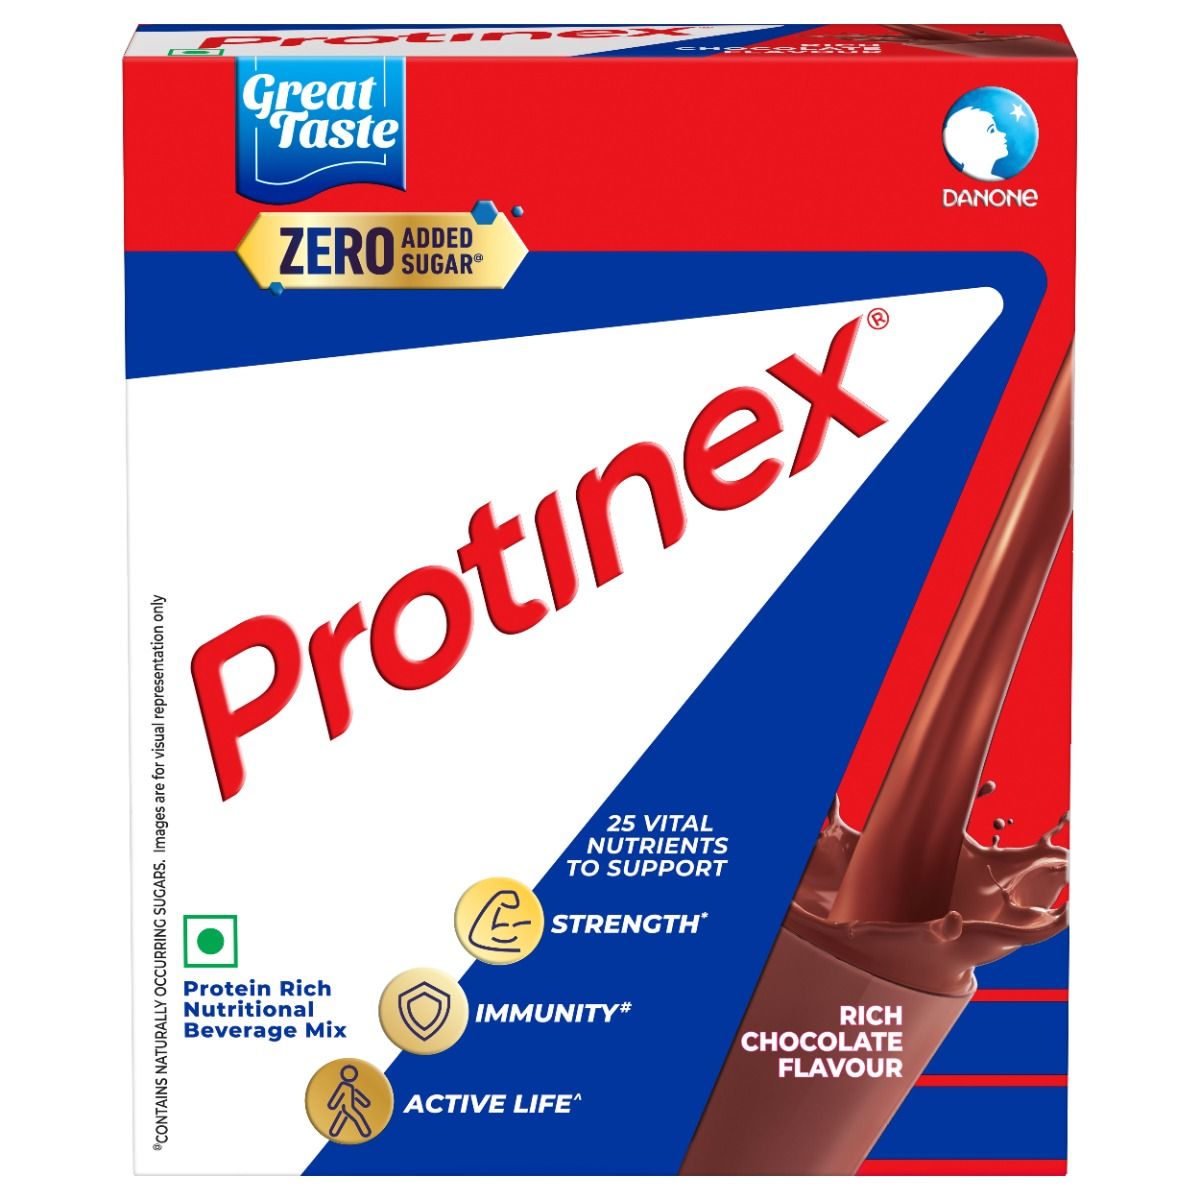 Protinex Tasty Chocolate Flavoured Powder, 250 gm Tin, Pack of 1 